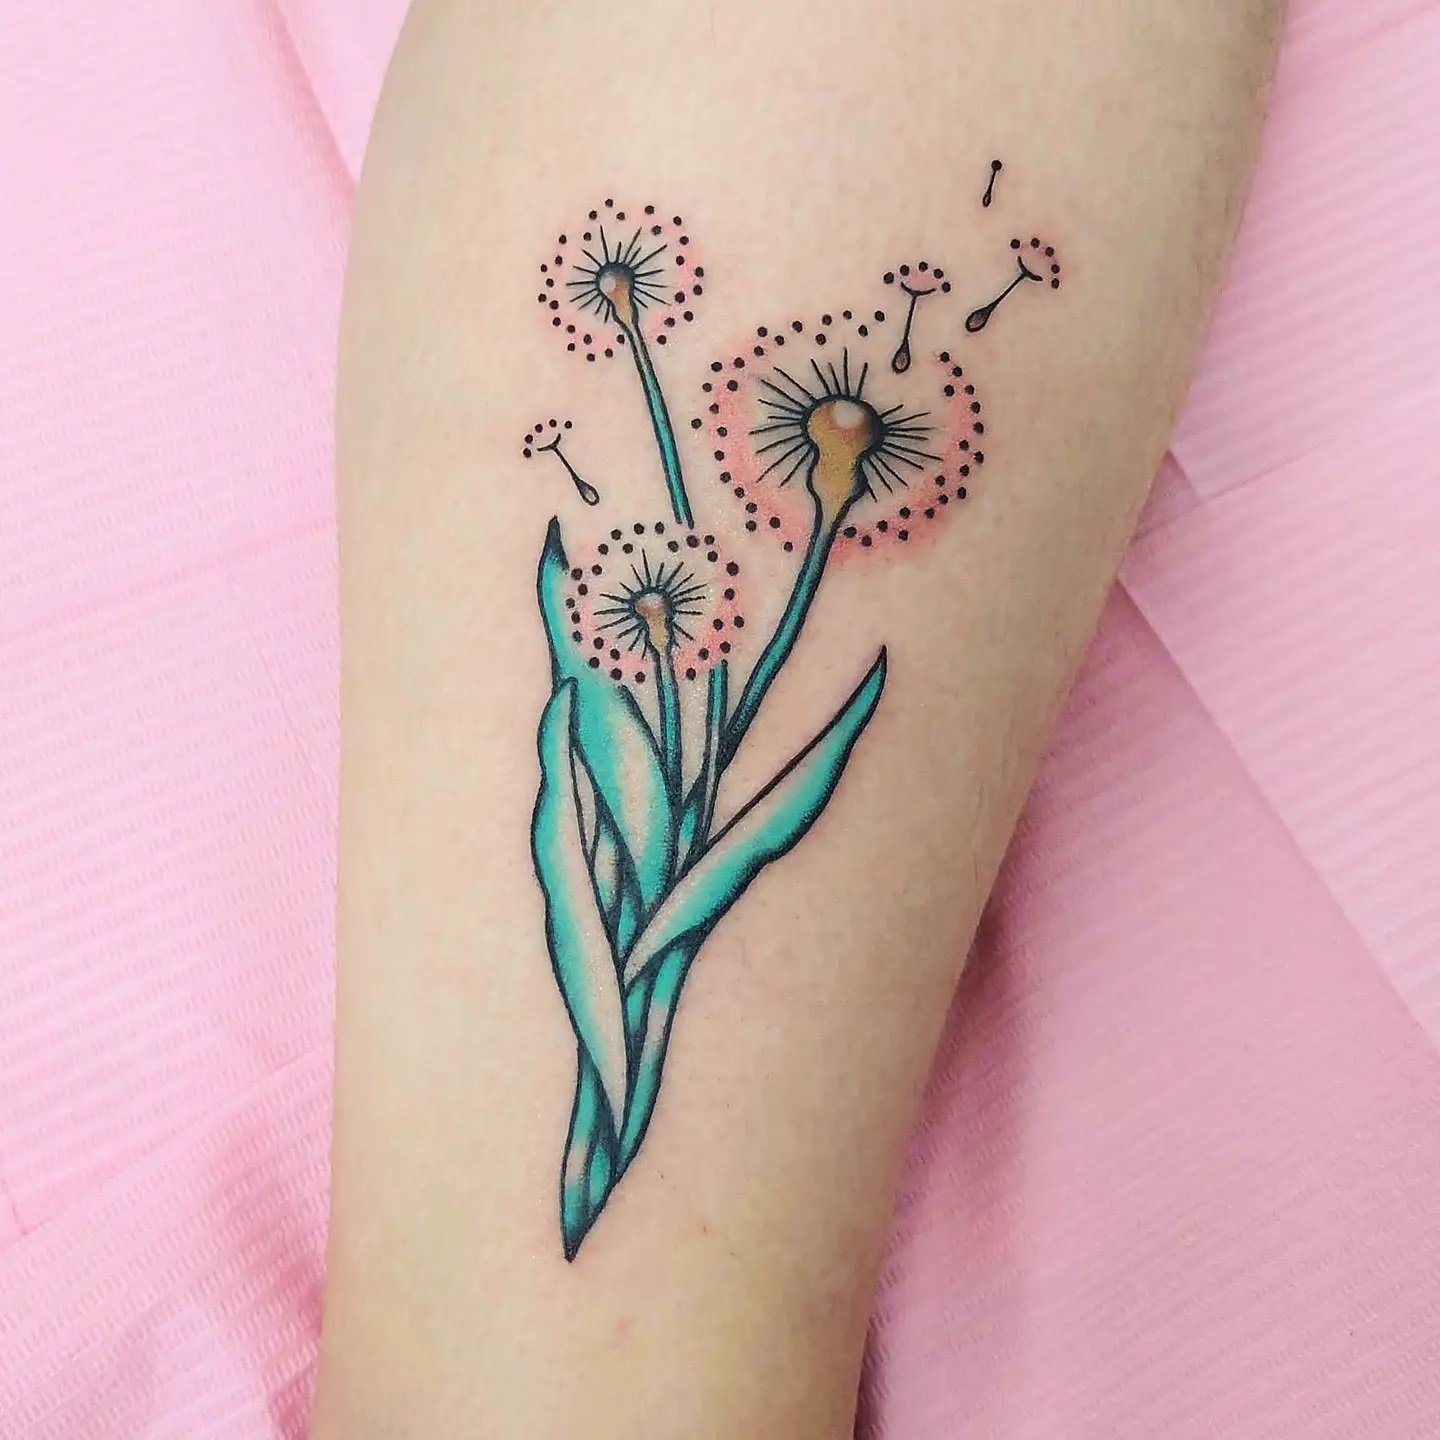 Spider Lily Tattoo Ideas 38